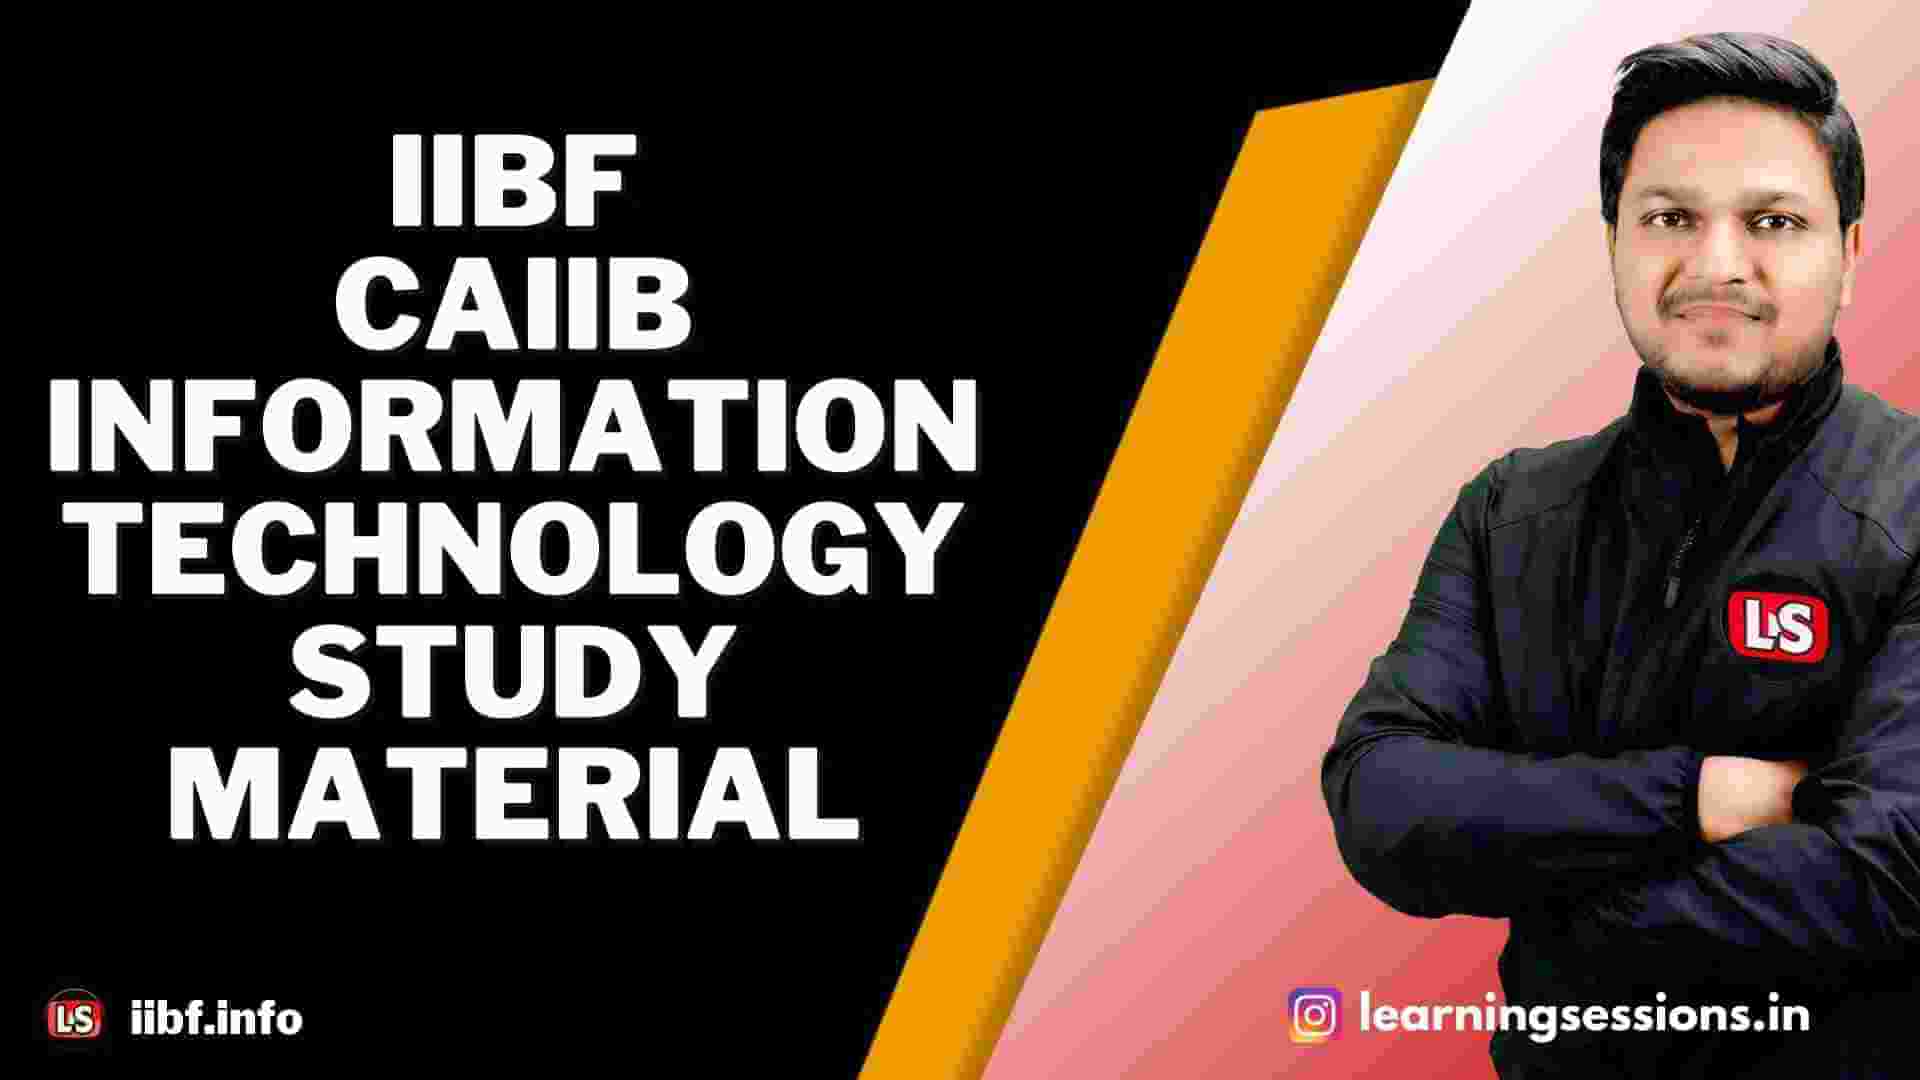 IIBF CAIIB INFORMATION TECHNOLOGY STUDY MATERIAL 2022